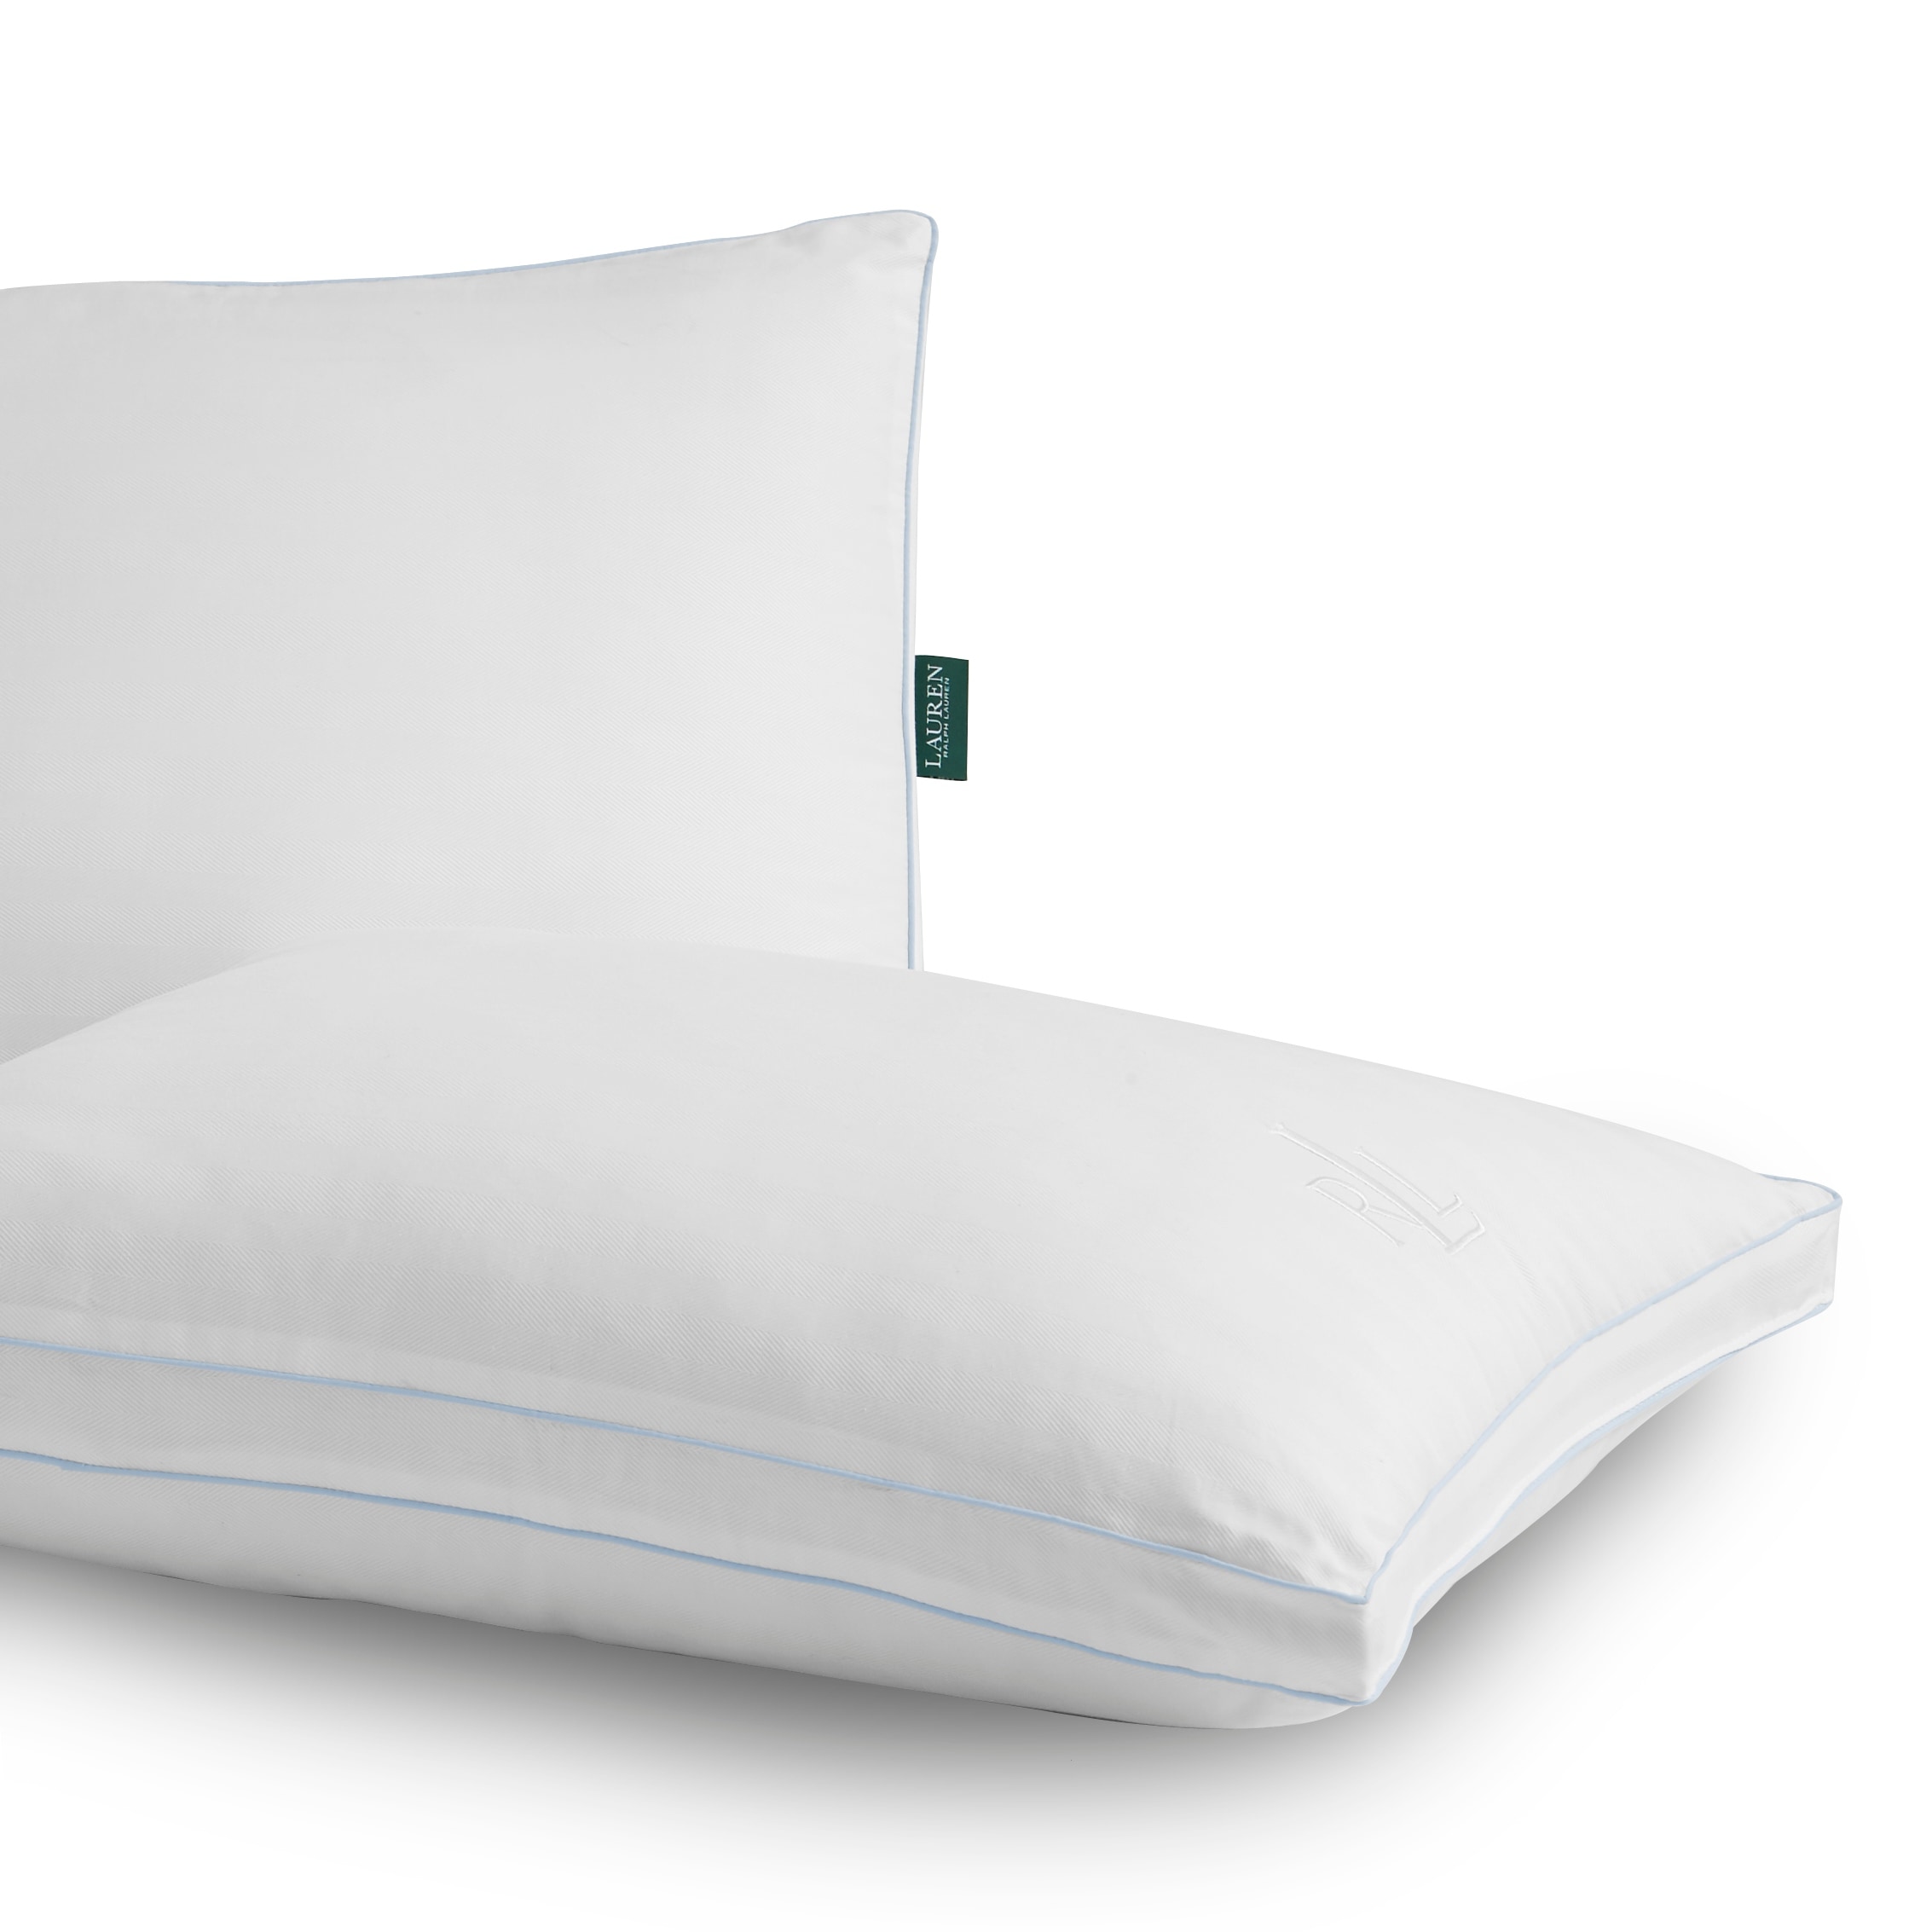 Lauren Ralph Lauren Lawton Extra-Firm Density Pillow - White/Blue Cord -  Overstock - 30951520